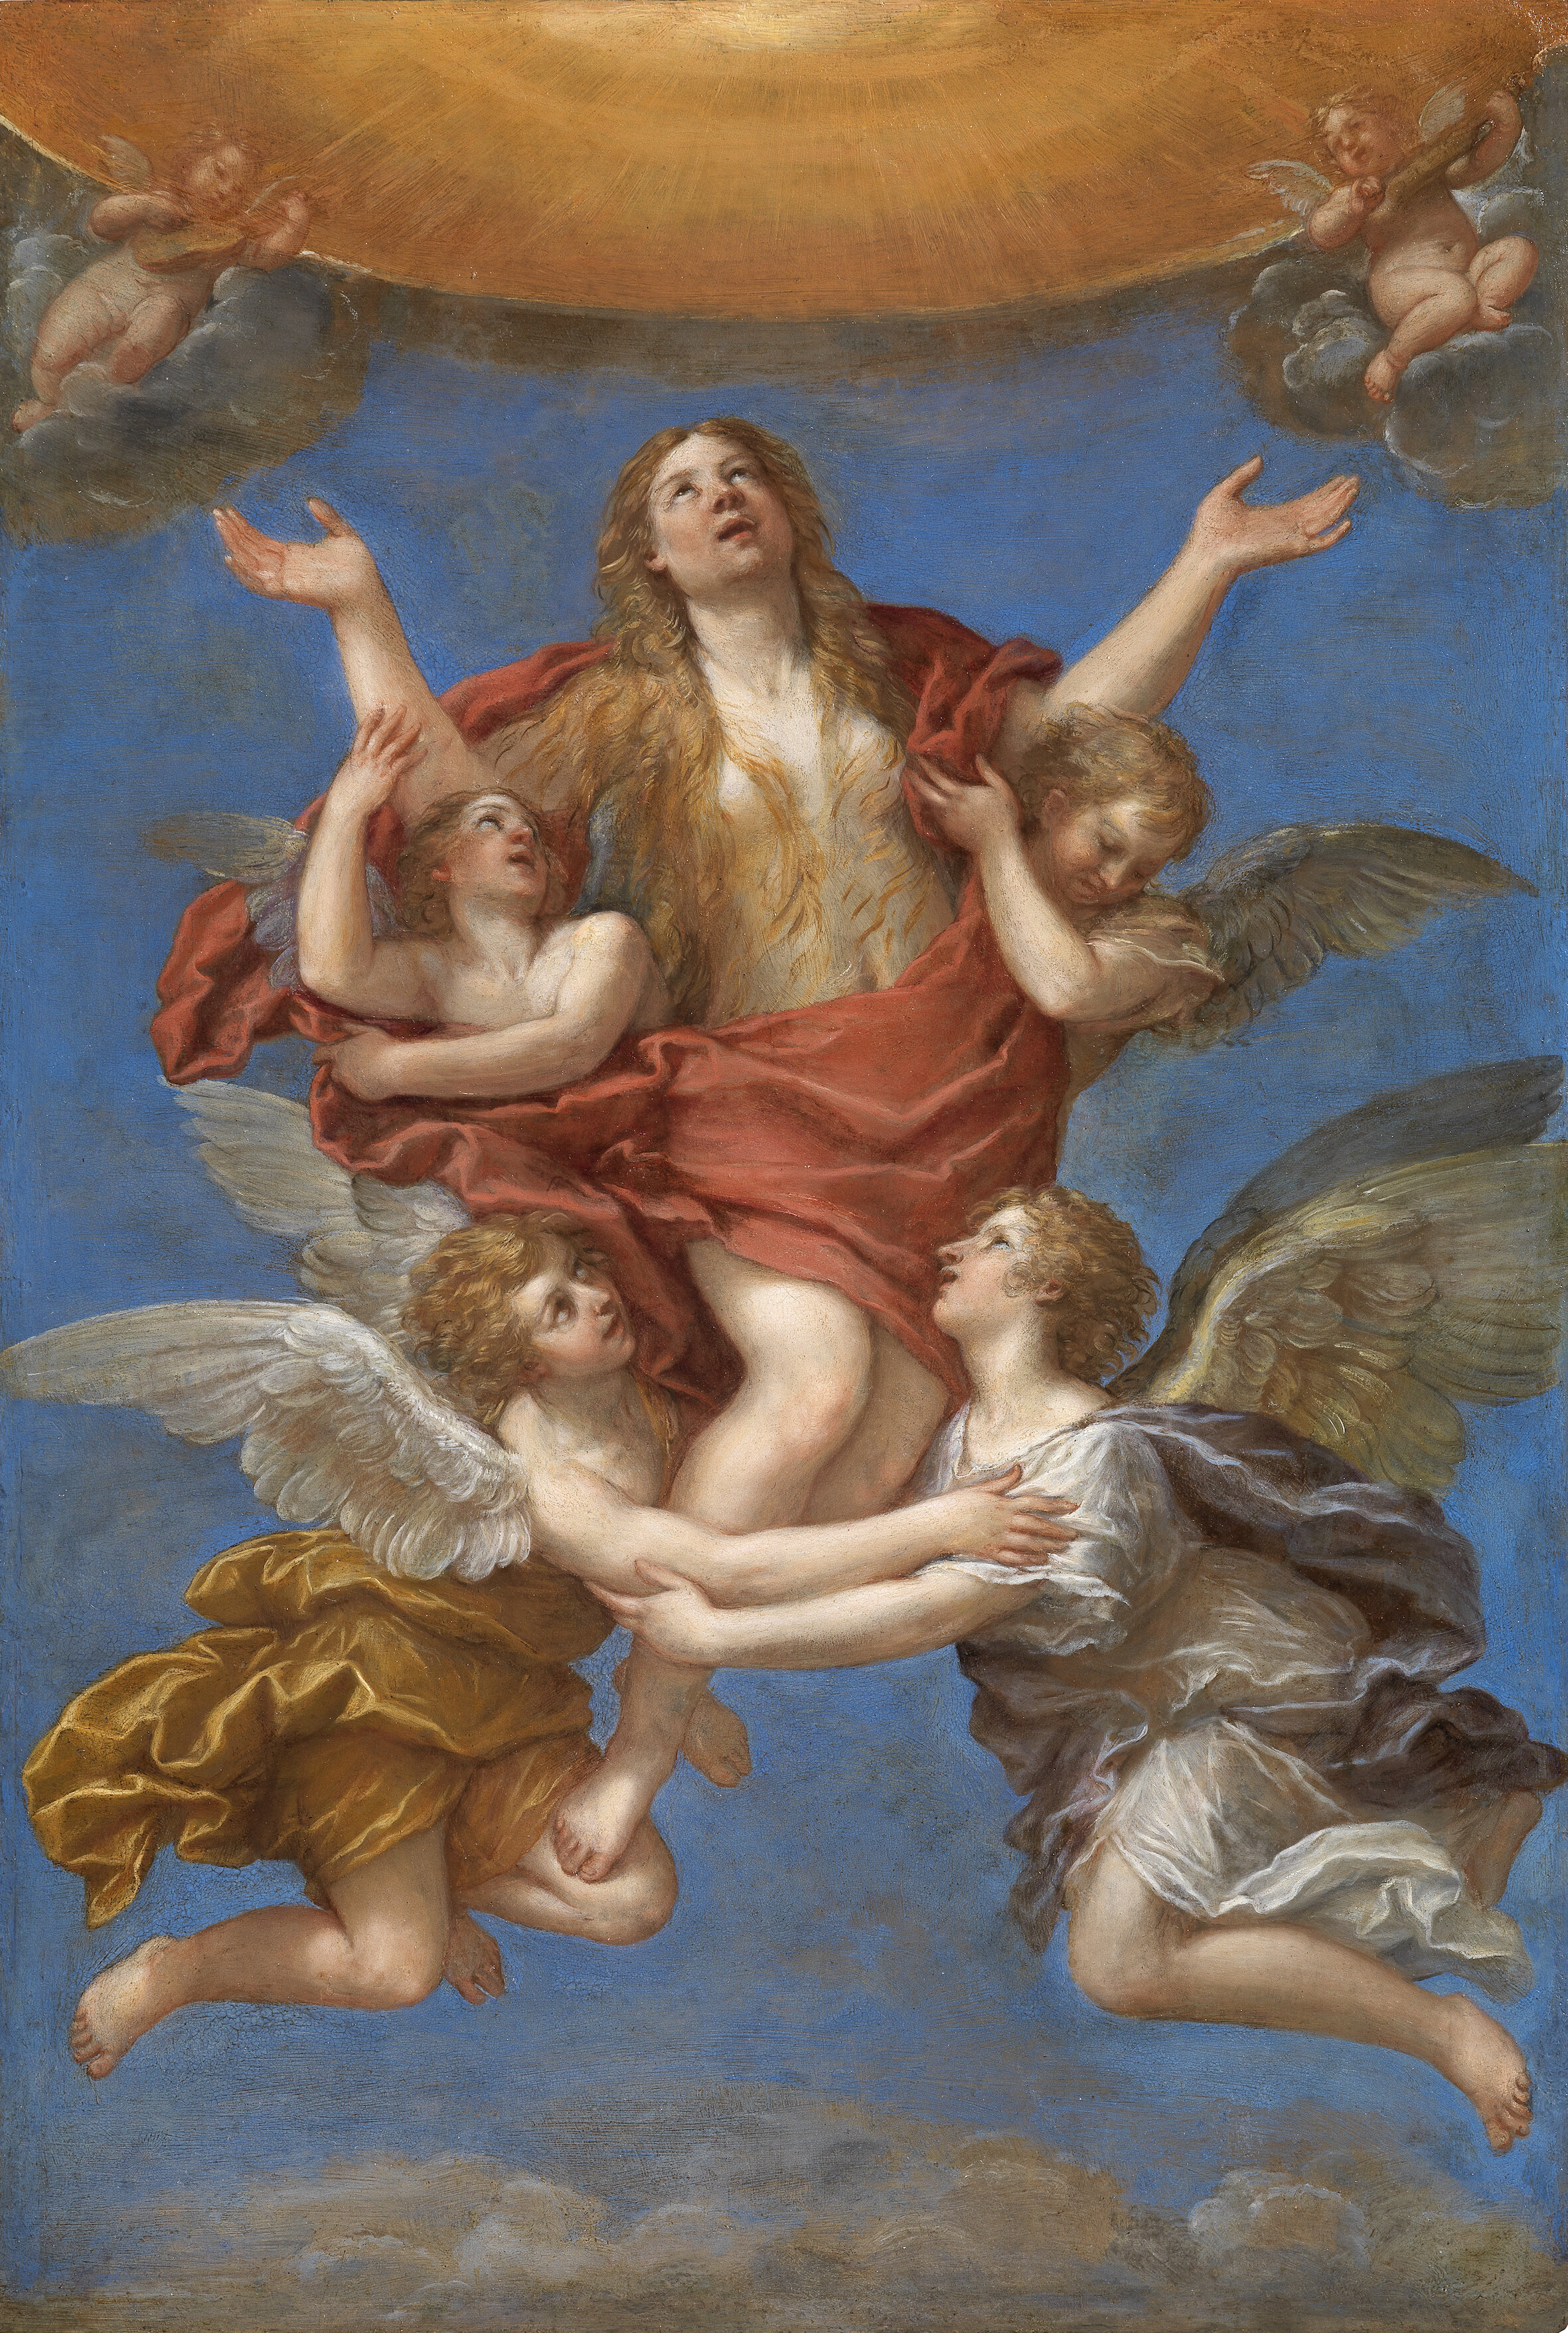  FRANCESCO ALBANI  1578 – 1660, Bologna     The Assumption of Saint Mary Magdalene    c.  1630-40    Oil on copper  42 x 27.5 cm.    Sold to the Saint Louis Art Museum  